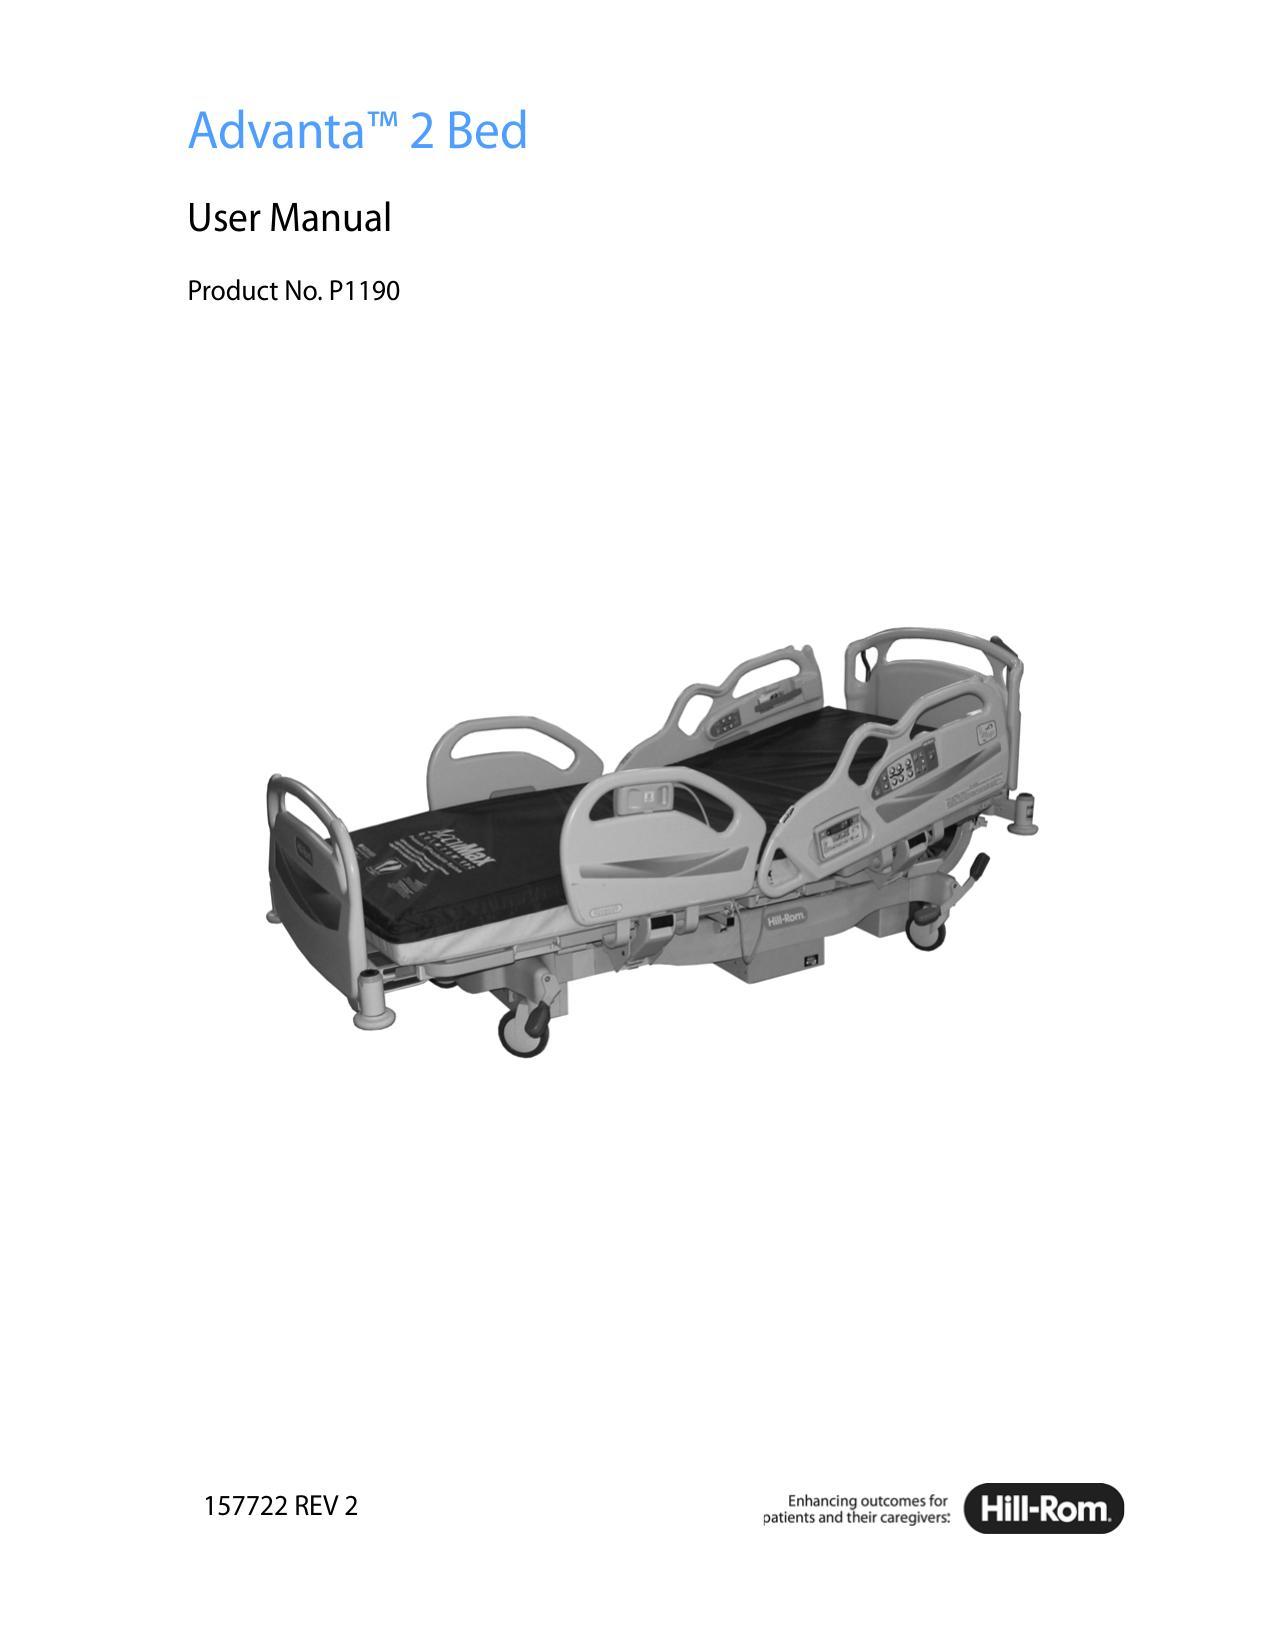 hill-rom-advanta-tm-2-bed-user-manual.pdf